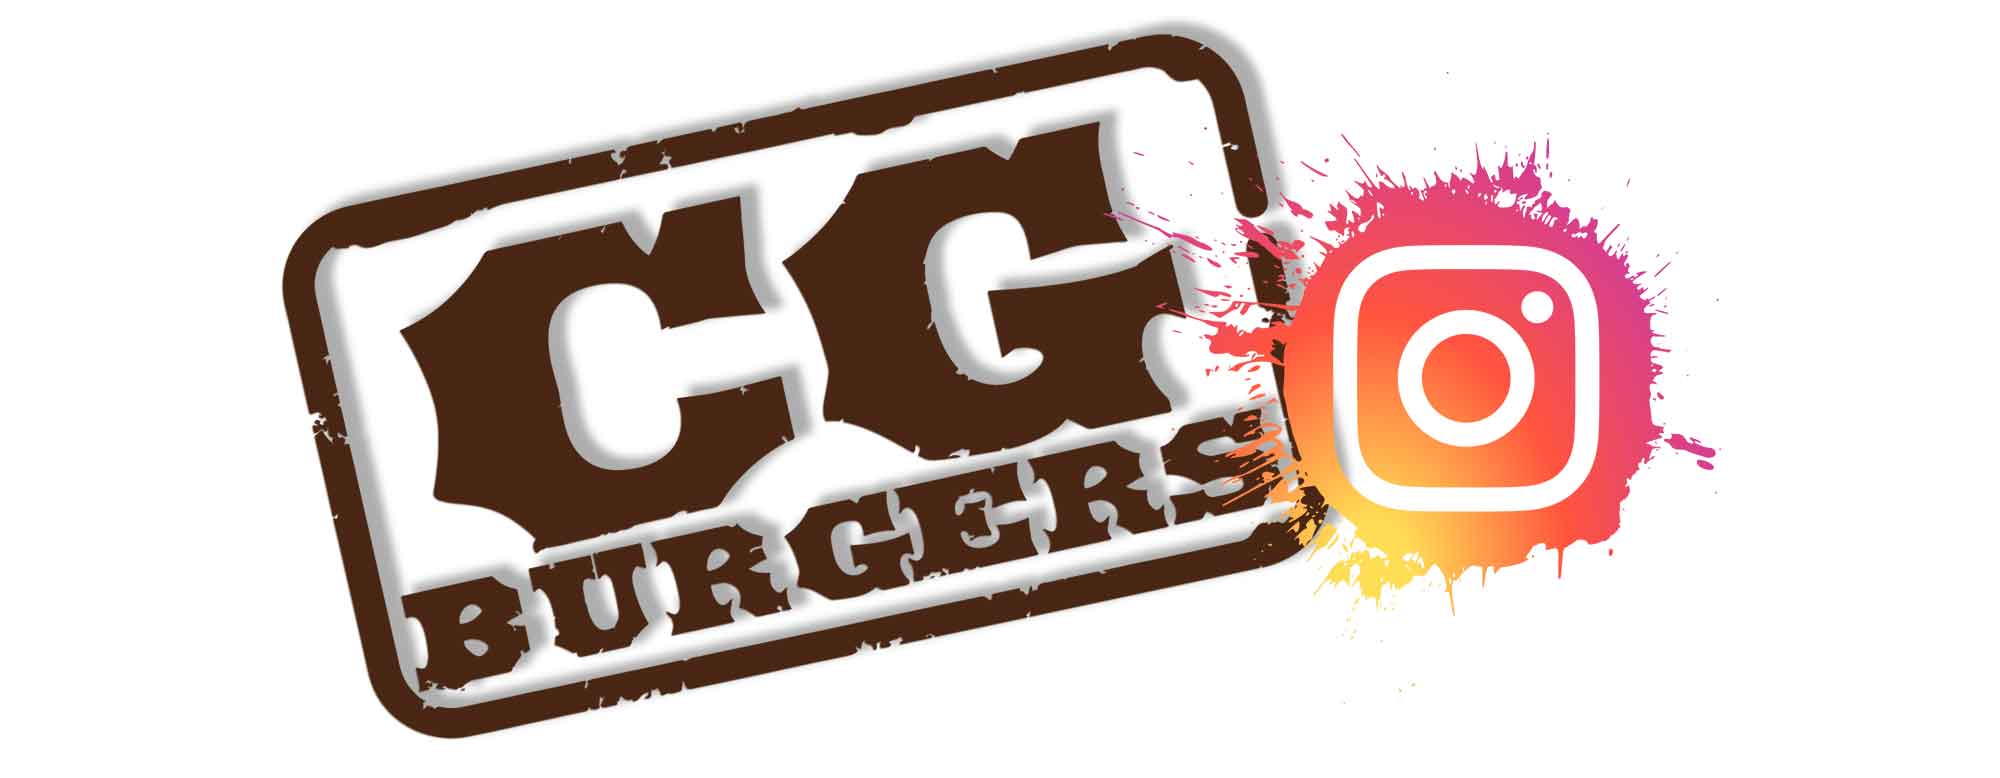 CG Burgers Instagram